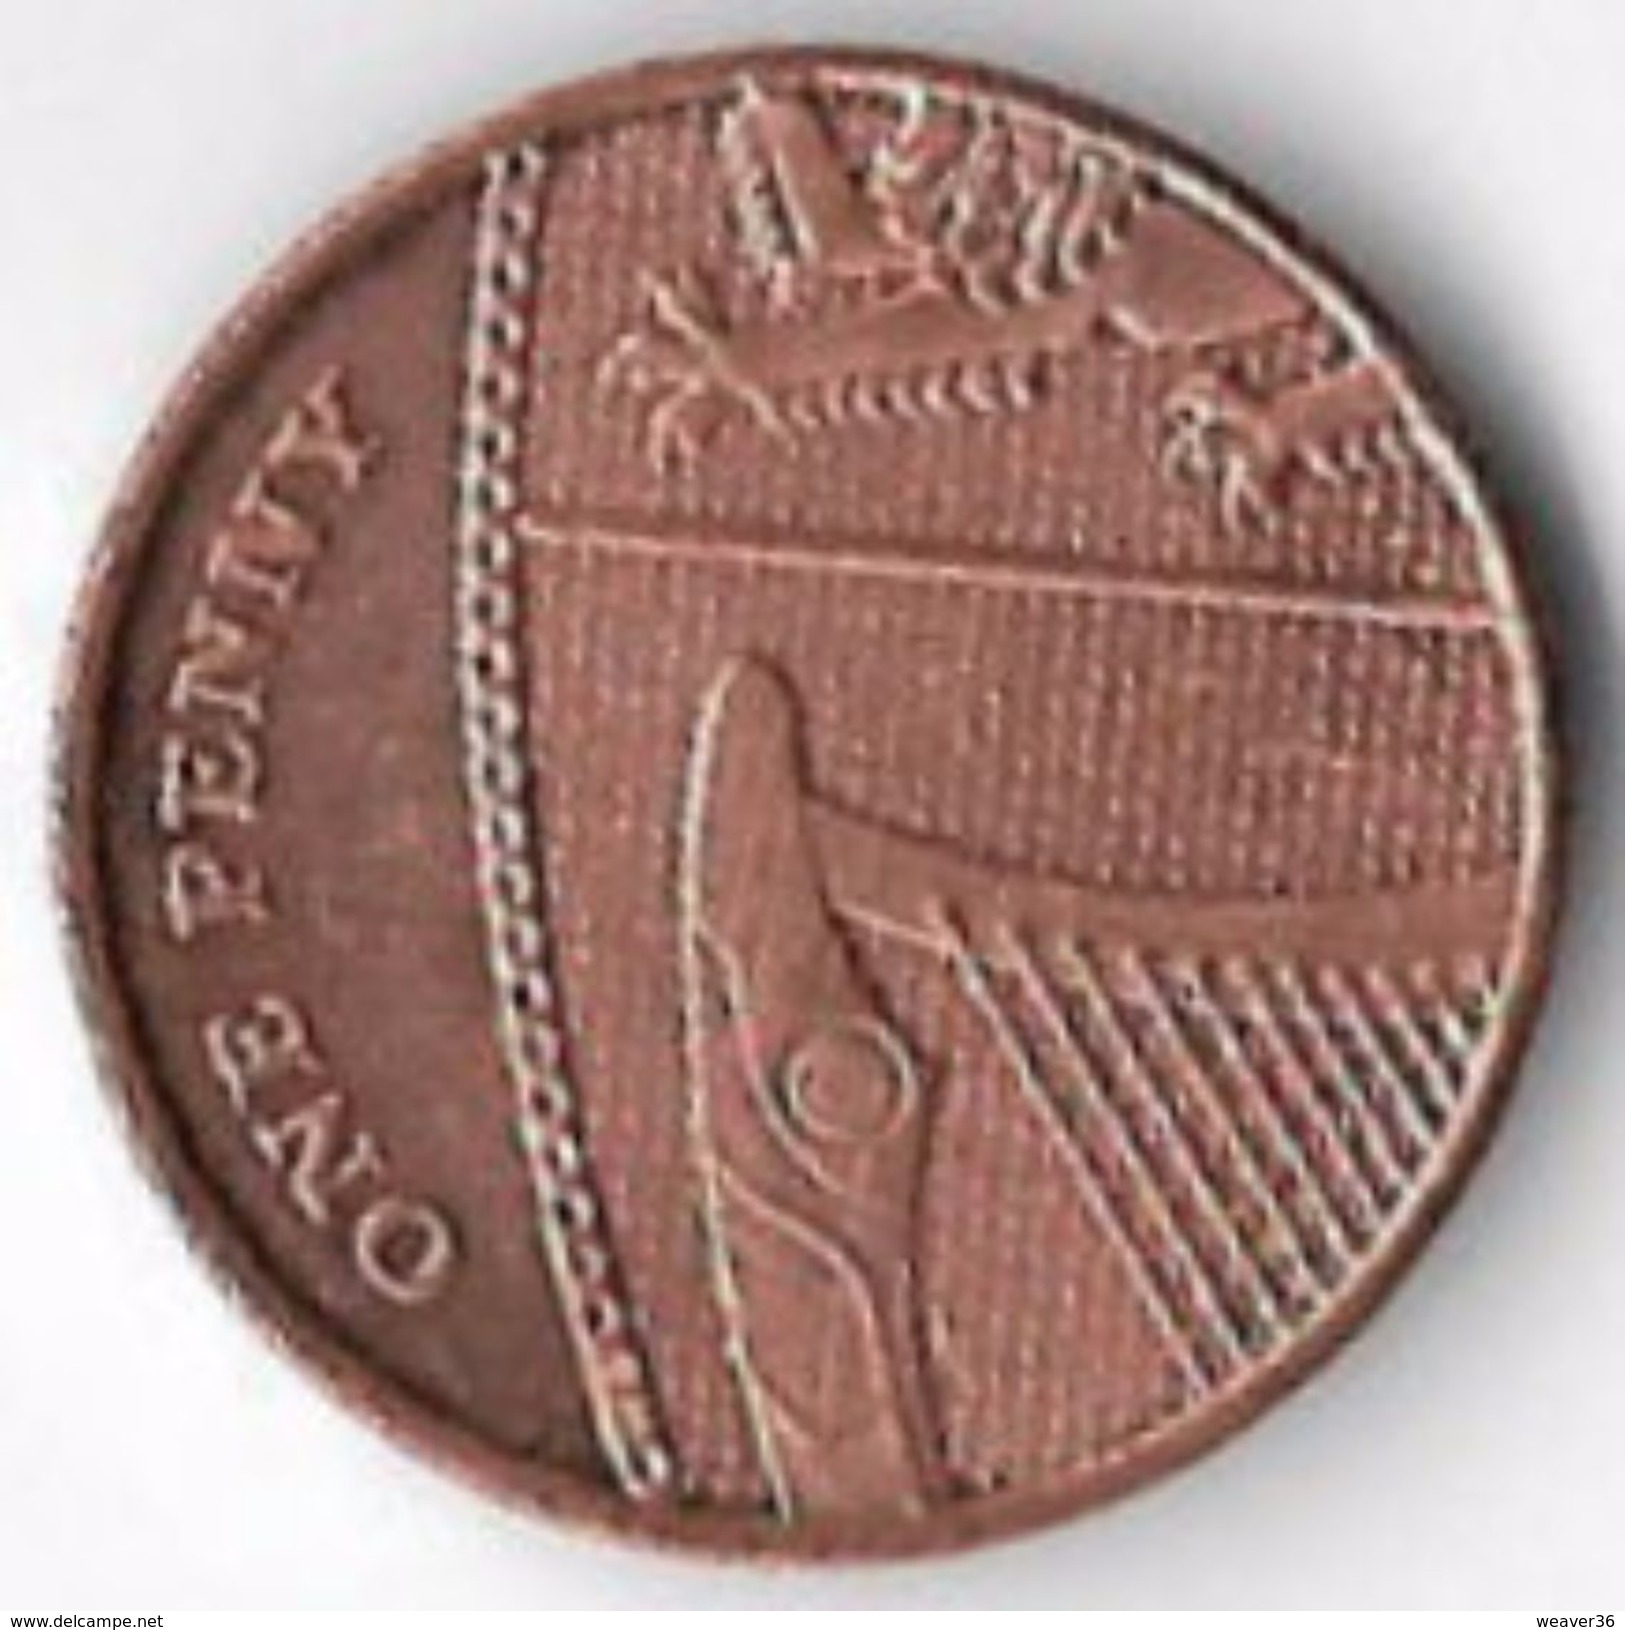 United Kingdom 2010 1p [C543/2D] - 1 Penny & 1 New Penny